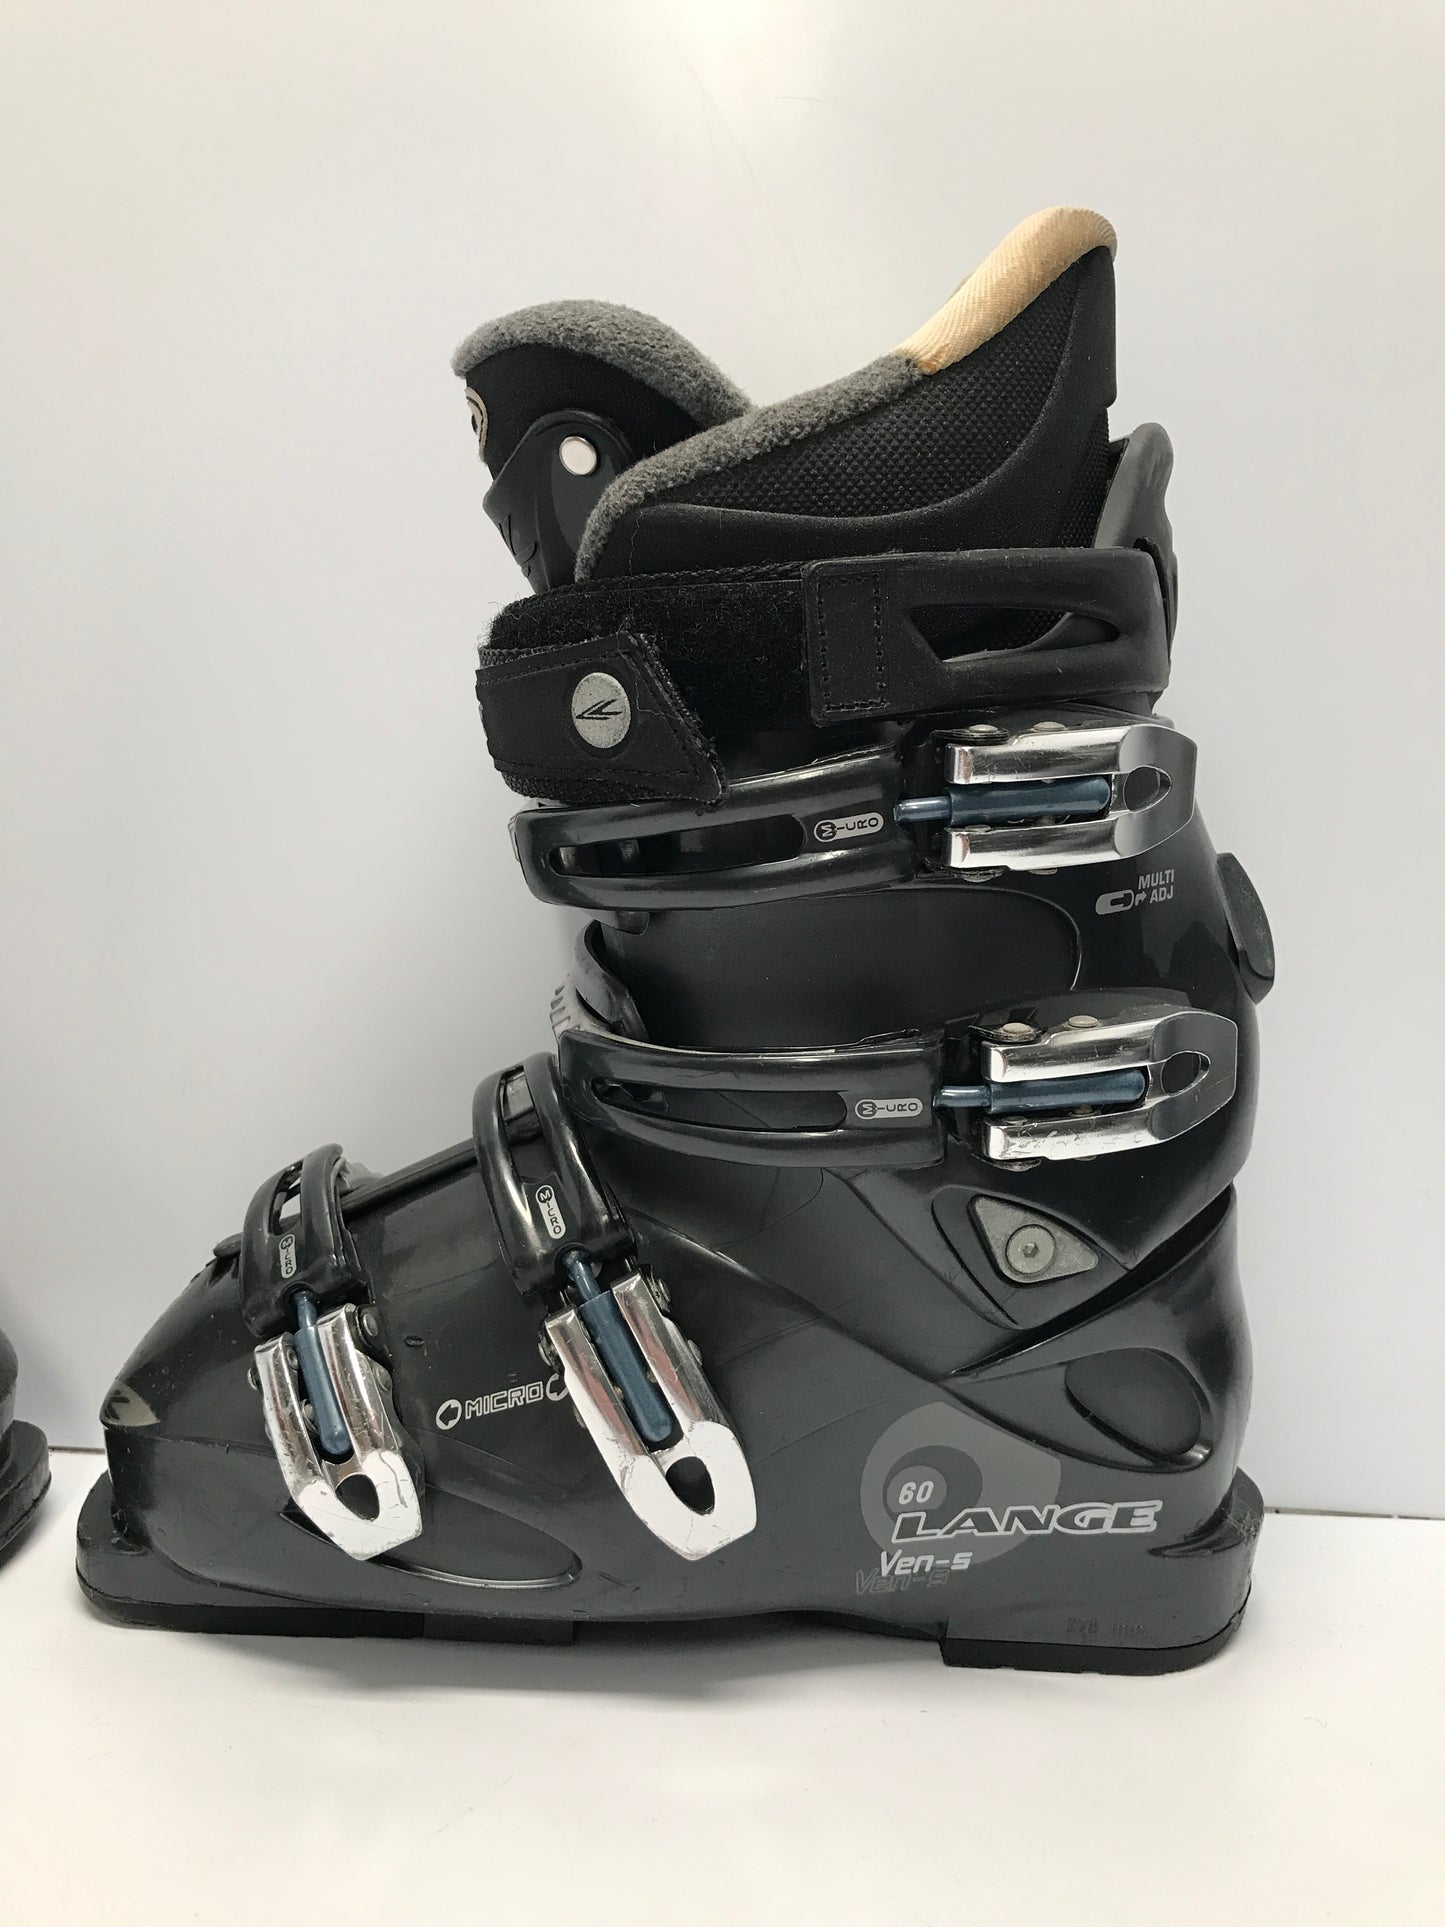 Ski Boots Mondo Size 23.0 Ladies Size 6.5 278 mm Lange Dk Grey